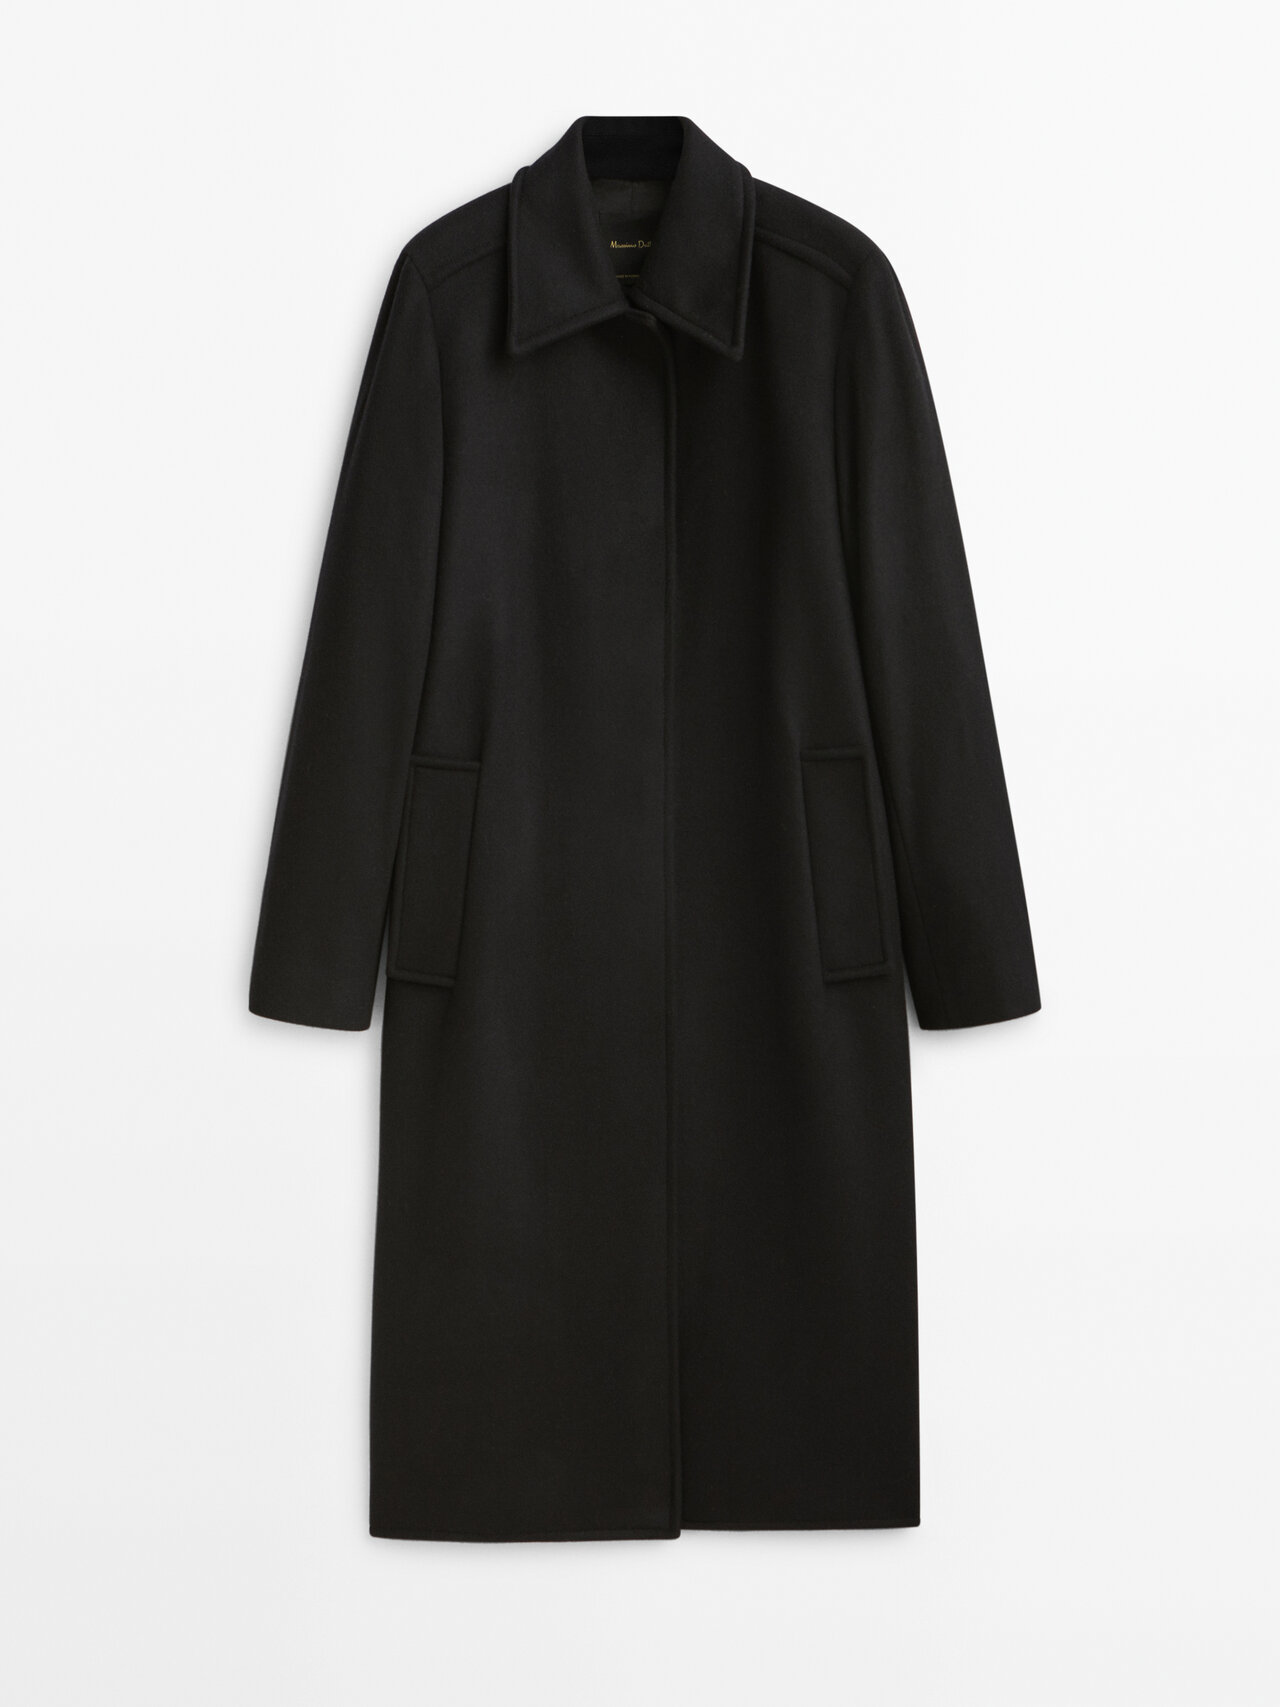 Massimo Dutti Long Black Wool Blend Coat